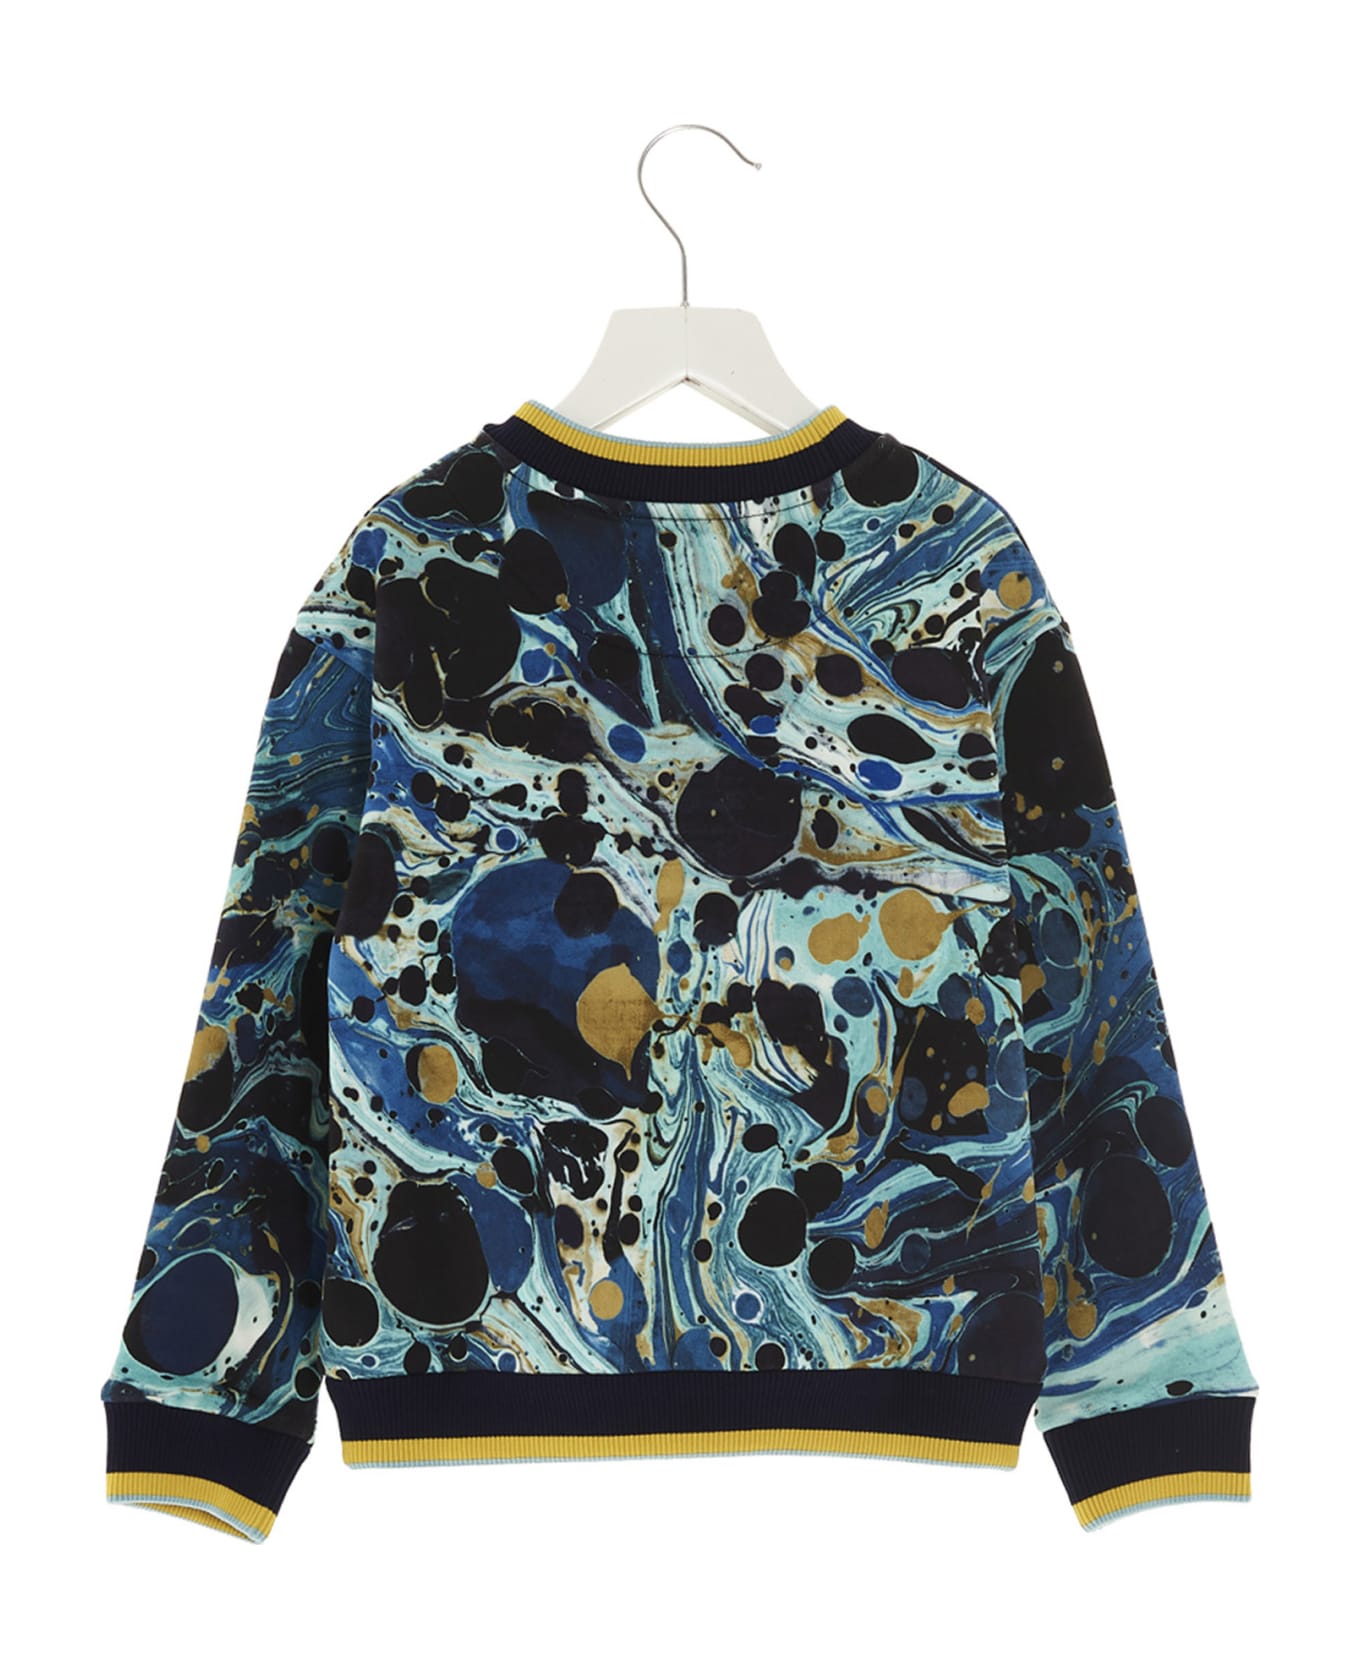 Dolce & Gabbana Marble Printed Sweatshirt - Multicolor